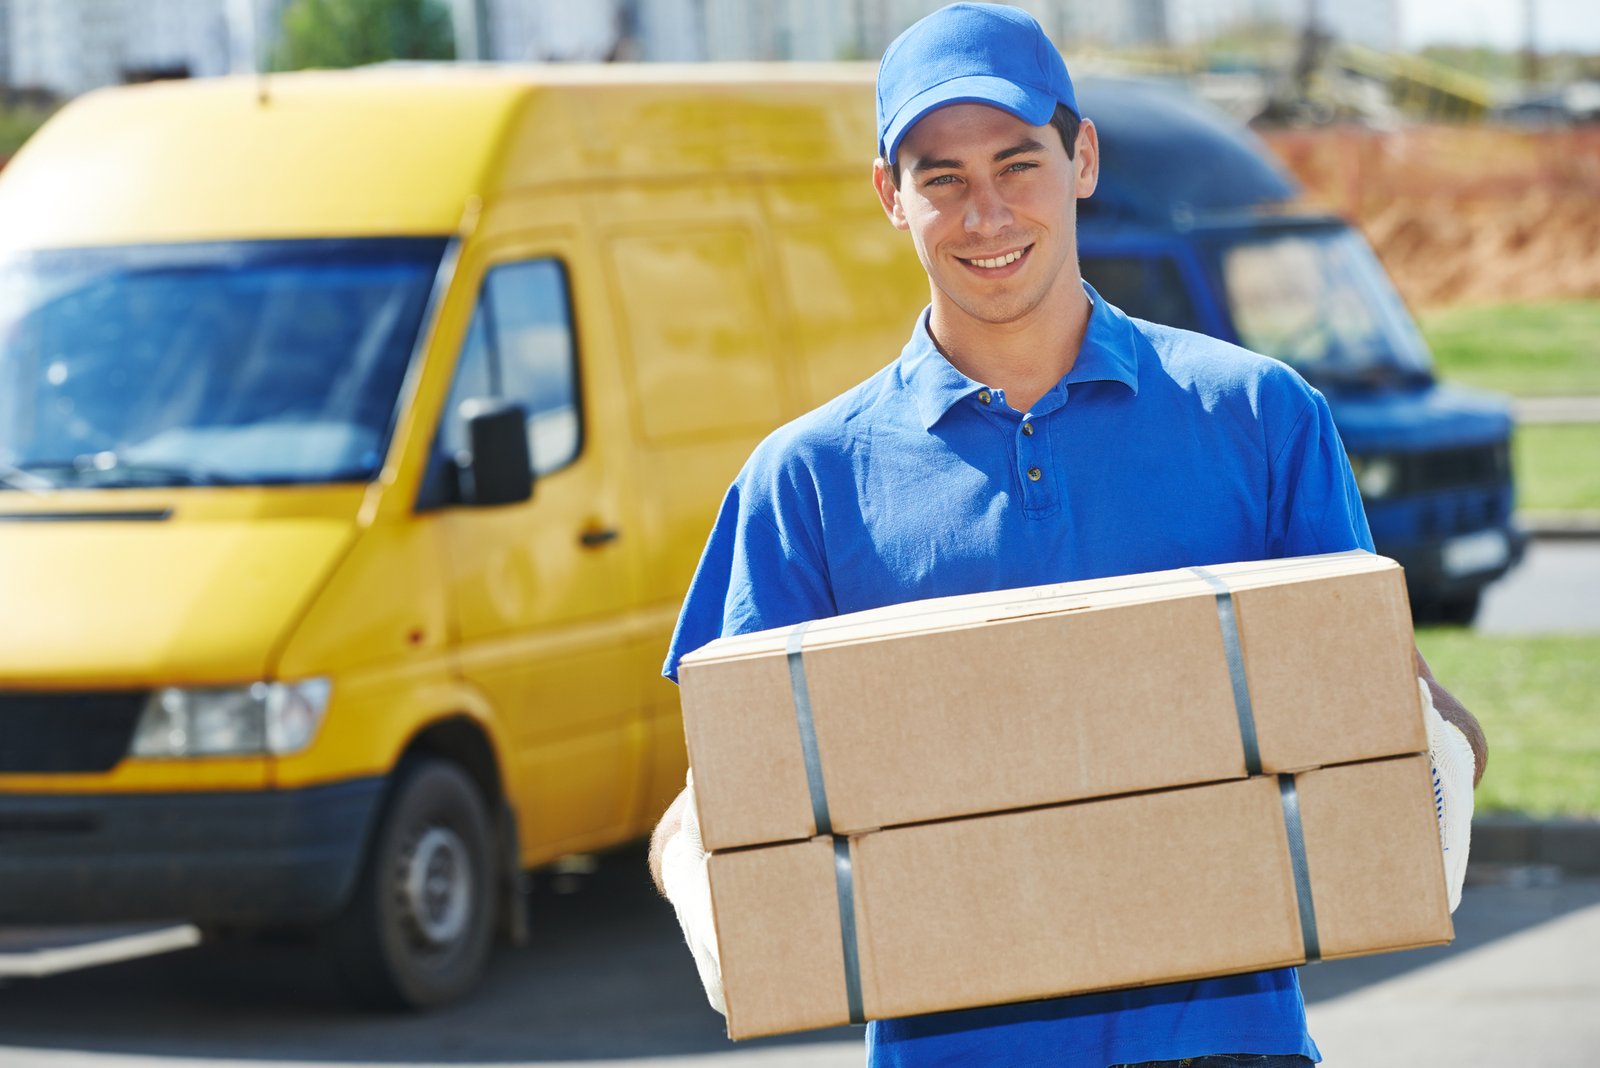 Online local parcel Delivery Services | 13 works Method